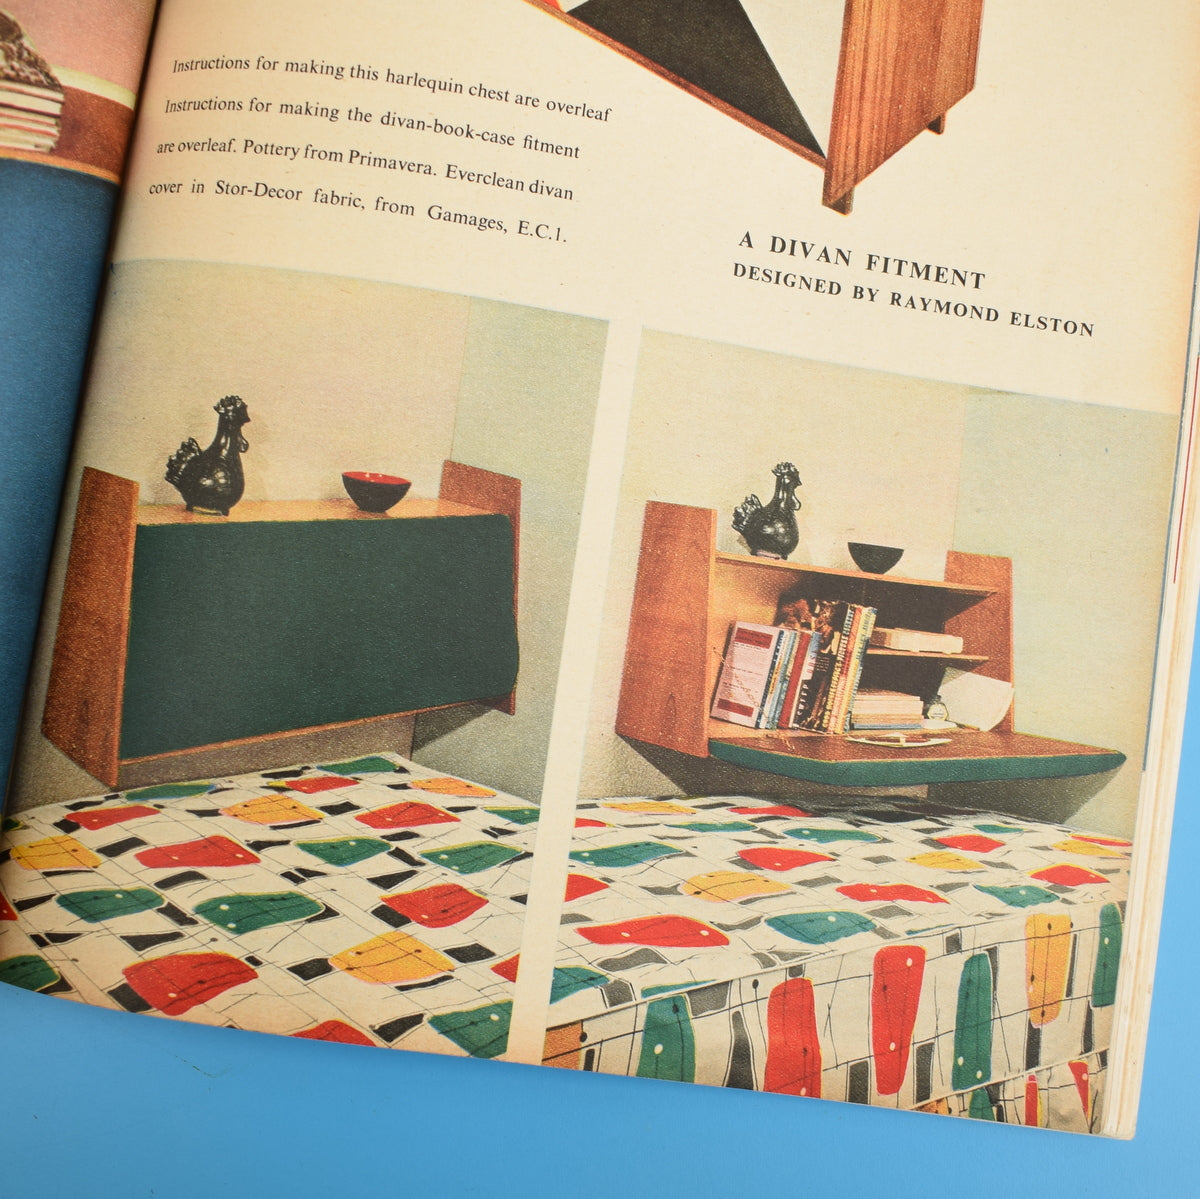 Vintage 1950s Magazine - Good Housekeeping 1955